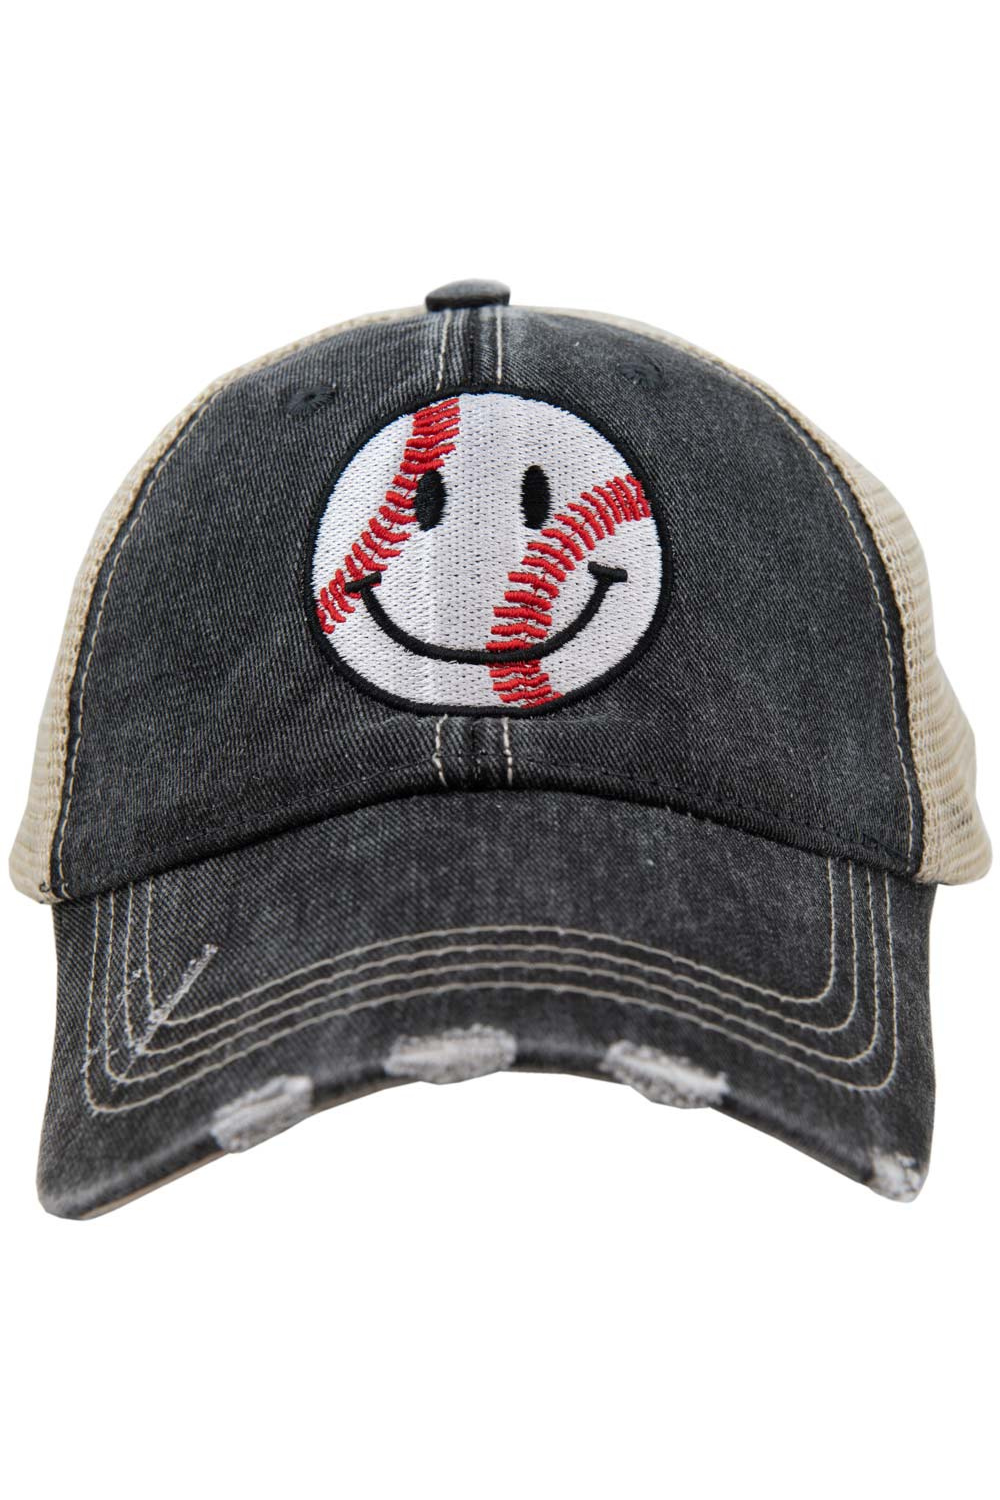 Baseball Happy Face Trucker Hat - PREORDER